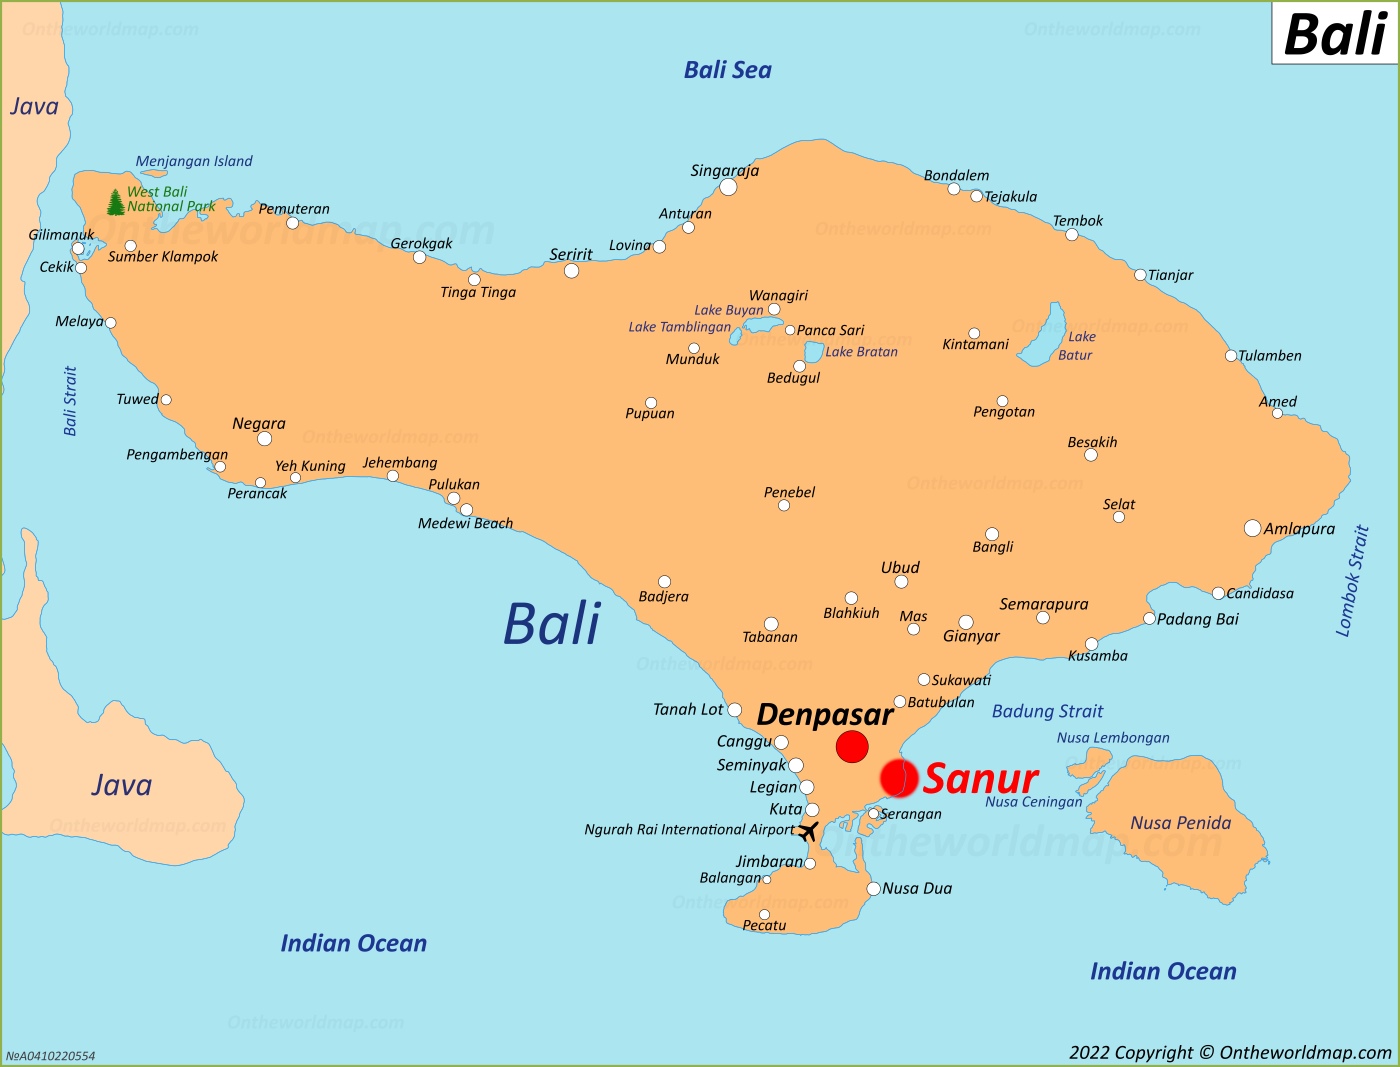 Sanur Location On The Bali Map